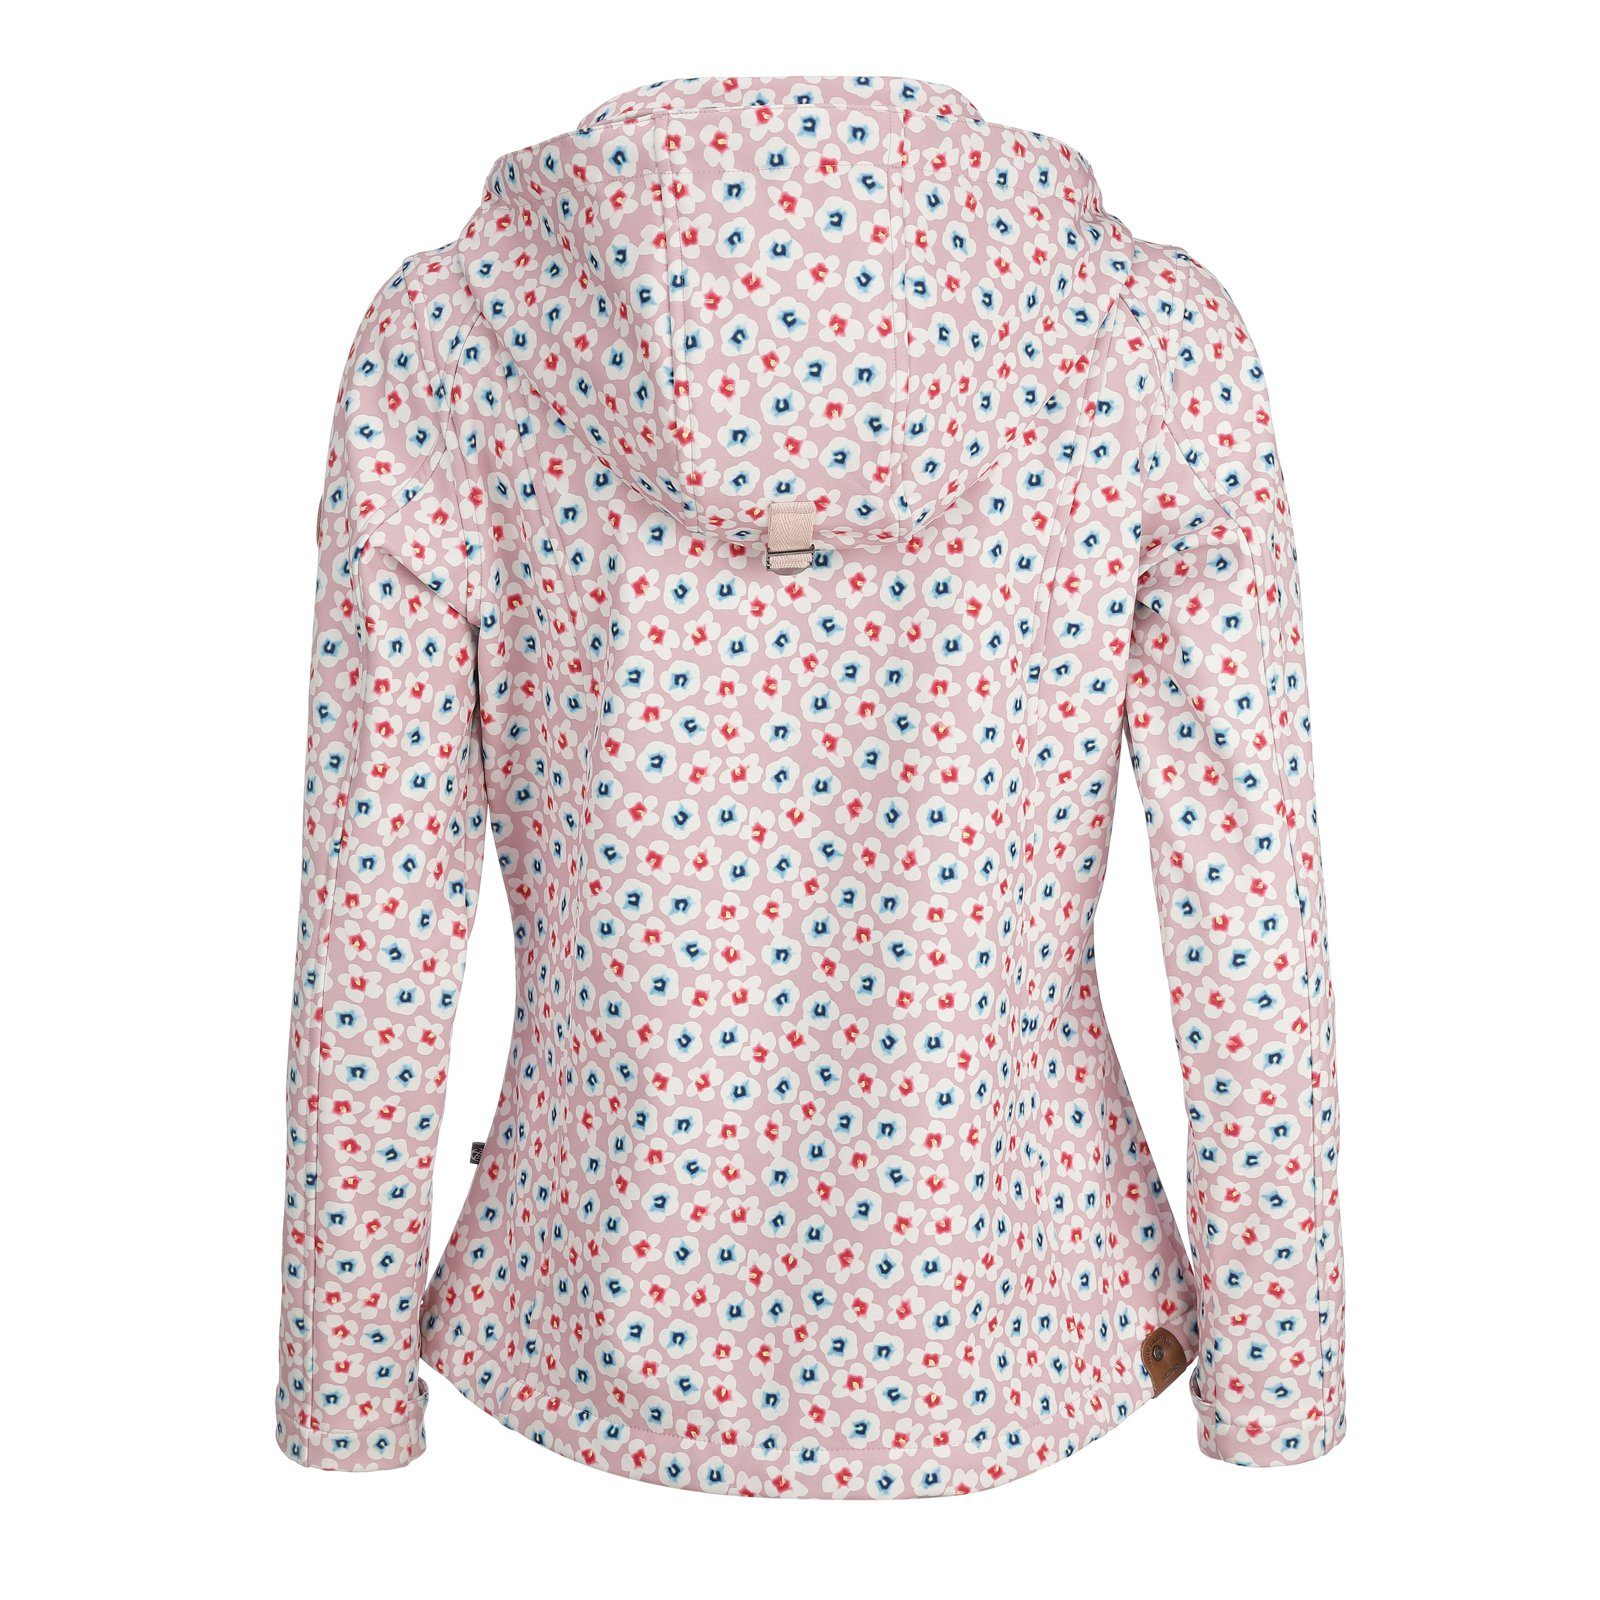 Dry Fashion Damen Wismar Fleece-Futter Softshelljacke Blumen-Print alt-rosa atmungsaktiv Jacke Kapuze